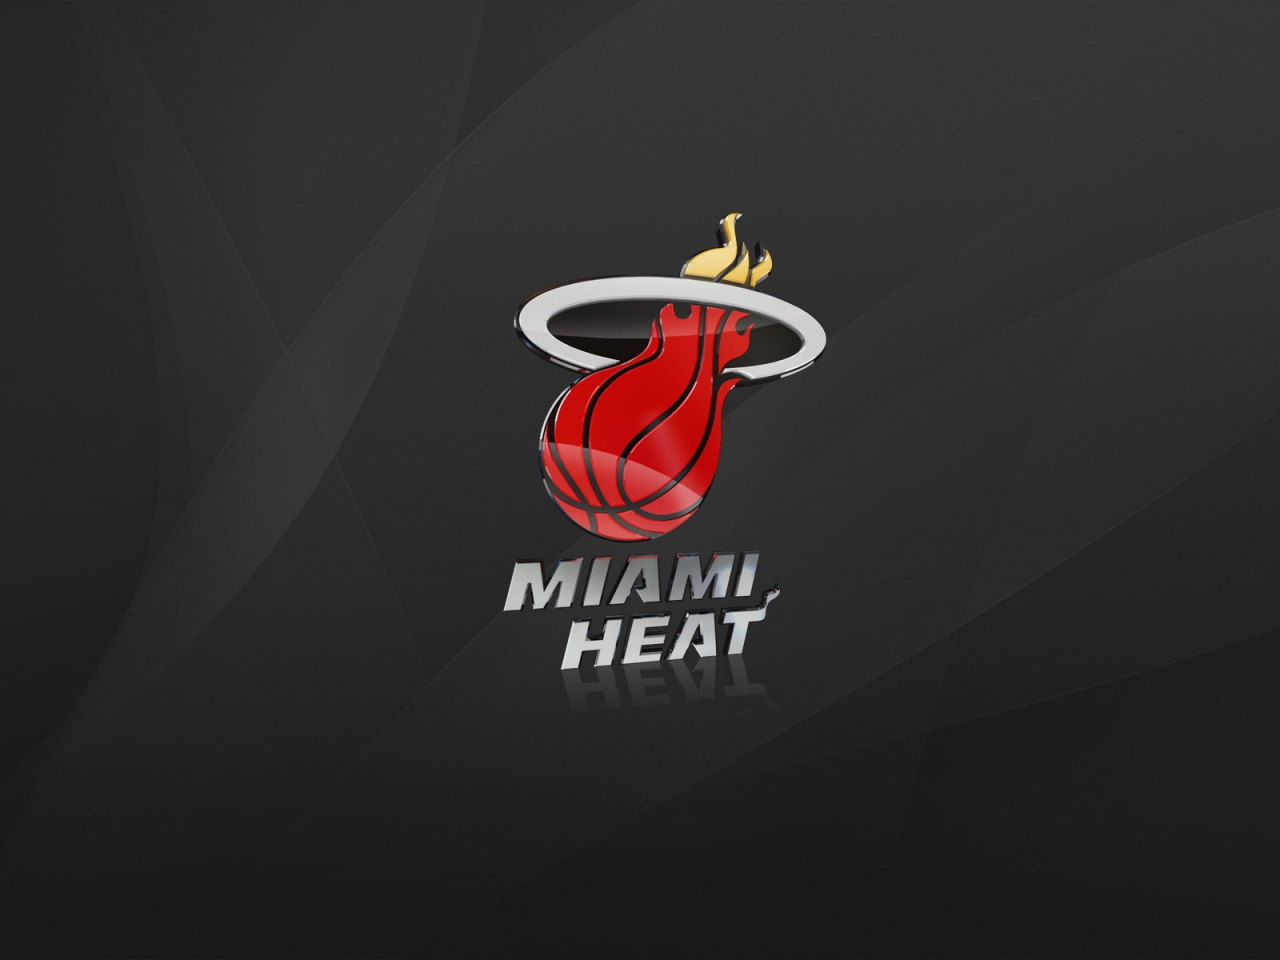 Miami Heat for 1280 x 960 resolution